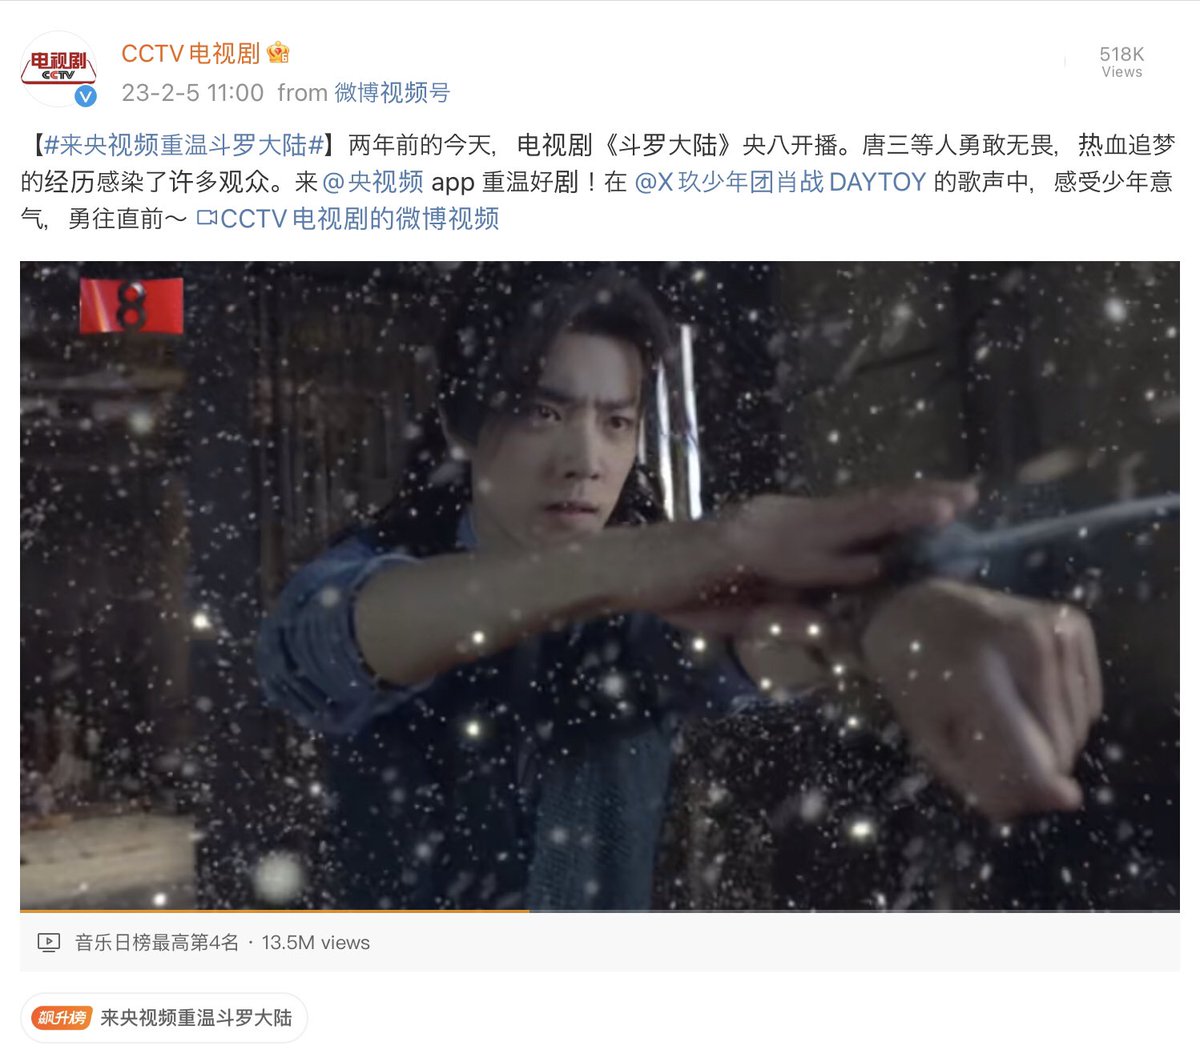 CCTV8 ชวนรำลึกความหลังครบรอบ 2 ปี ทีวีซีรีส์ #ตำนานจอมยุทธ์ภูตถังซาน ดู MV เพลงประกอบที่ร้องโดย #เซียวจ้าน ได้ตามลิงค์
m.weibo.cn/2030112487/486…
และดูซีรี่ส์ย้อนหลังได้ที่แอพ 央视频 
(ของไทยดูได้ที่ WeTV ค่า)
#XiaoZhan 
#DouluoContinent